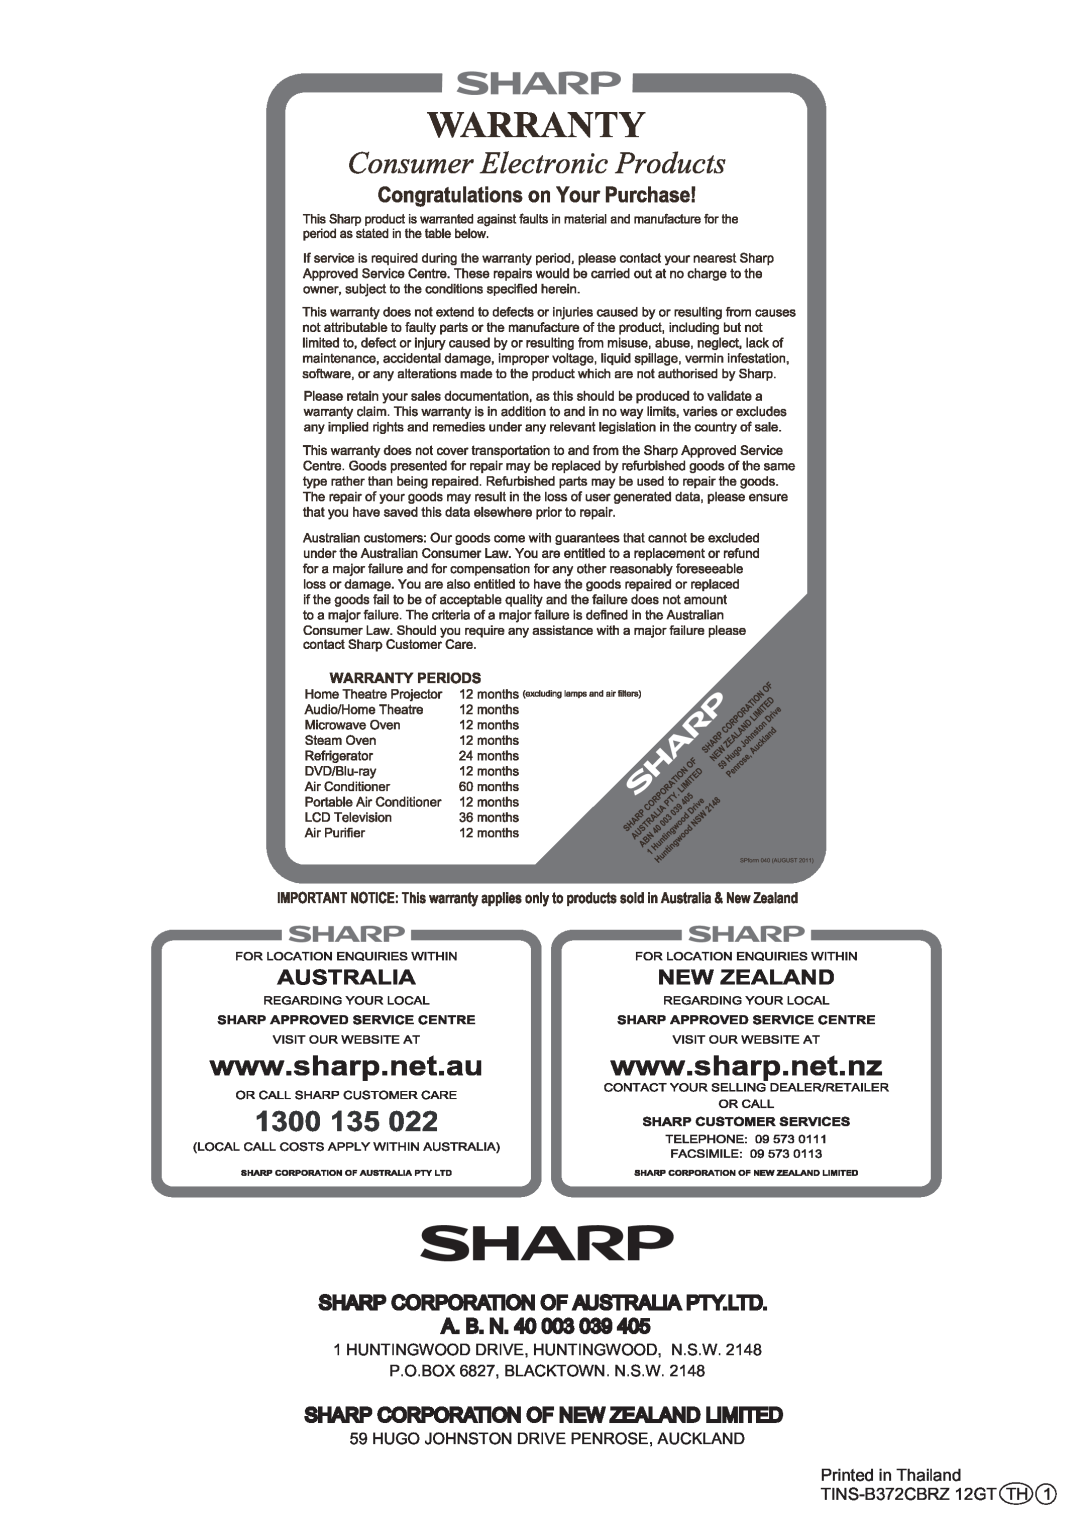 Sharp SJ-308V, SJ-244V A. B. N. 40, Sharp Corporation Of New Zealand Limited, TINS-B372CBRZ 12GT TH, Printed In Thailand 